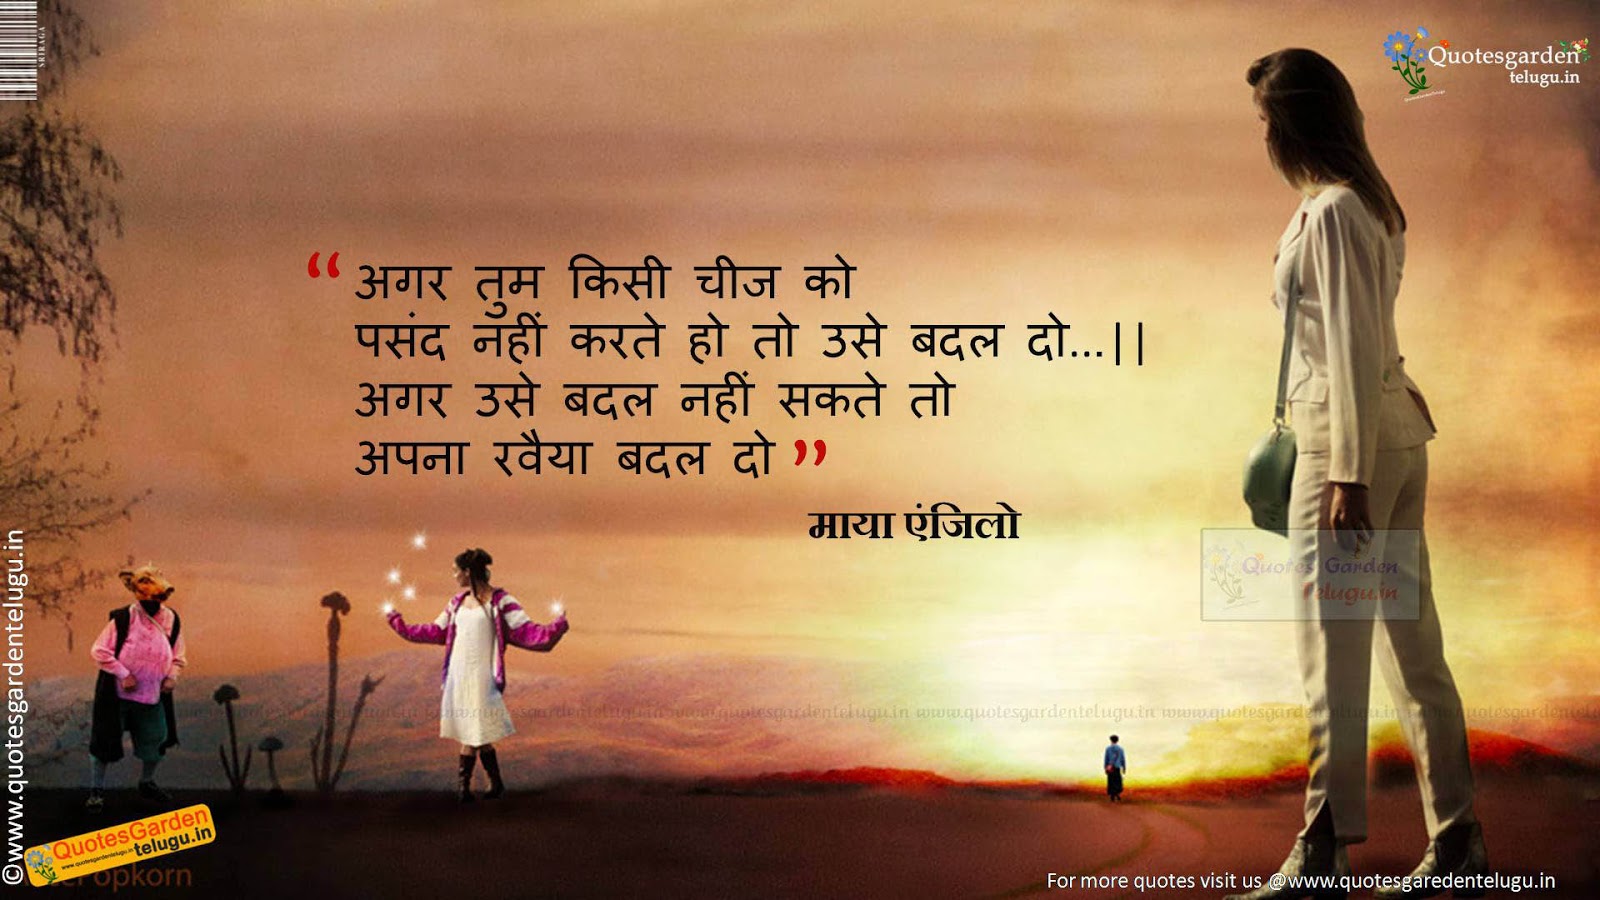 Hindi Suvichar Wallpaper Download Subichar pic download   Happy good  morning quotes Good morning wishes quotes Hindi good morning quotes